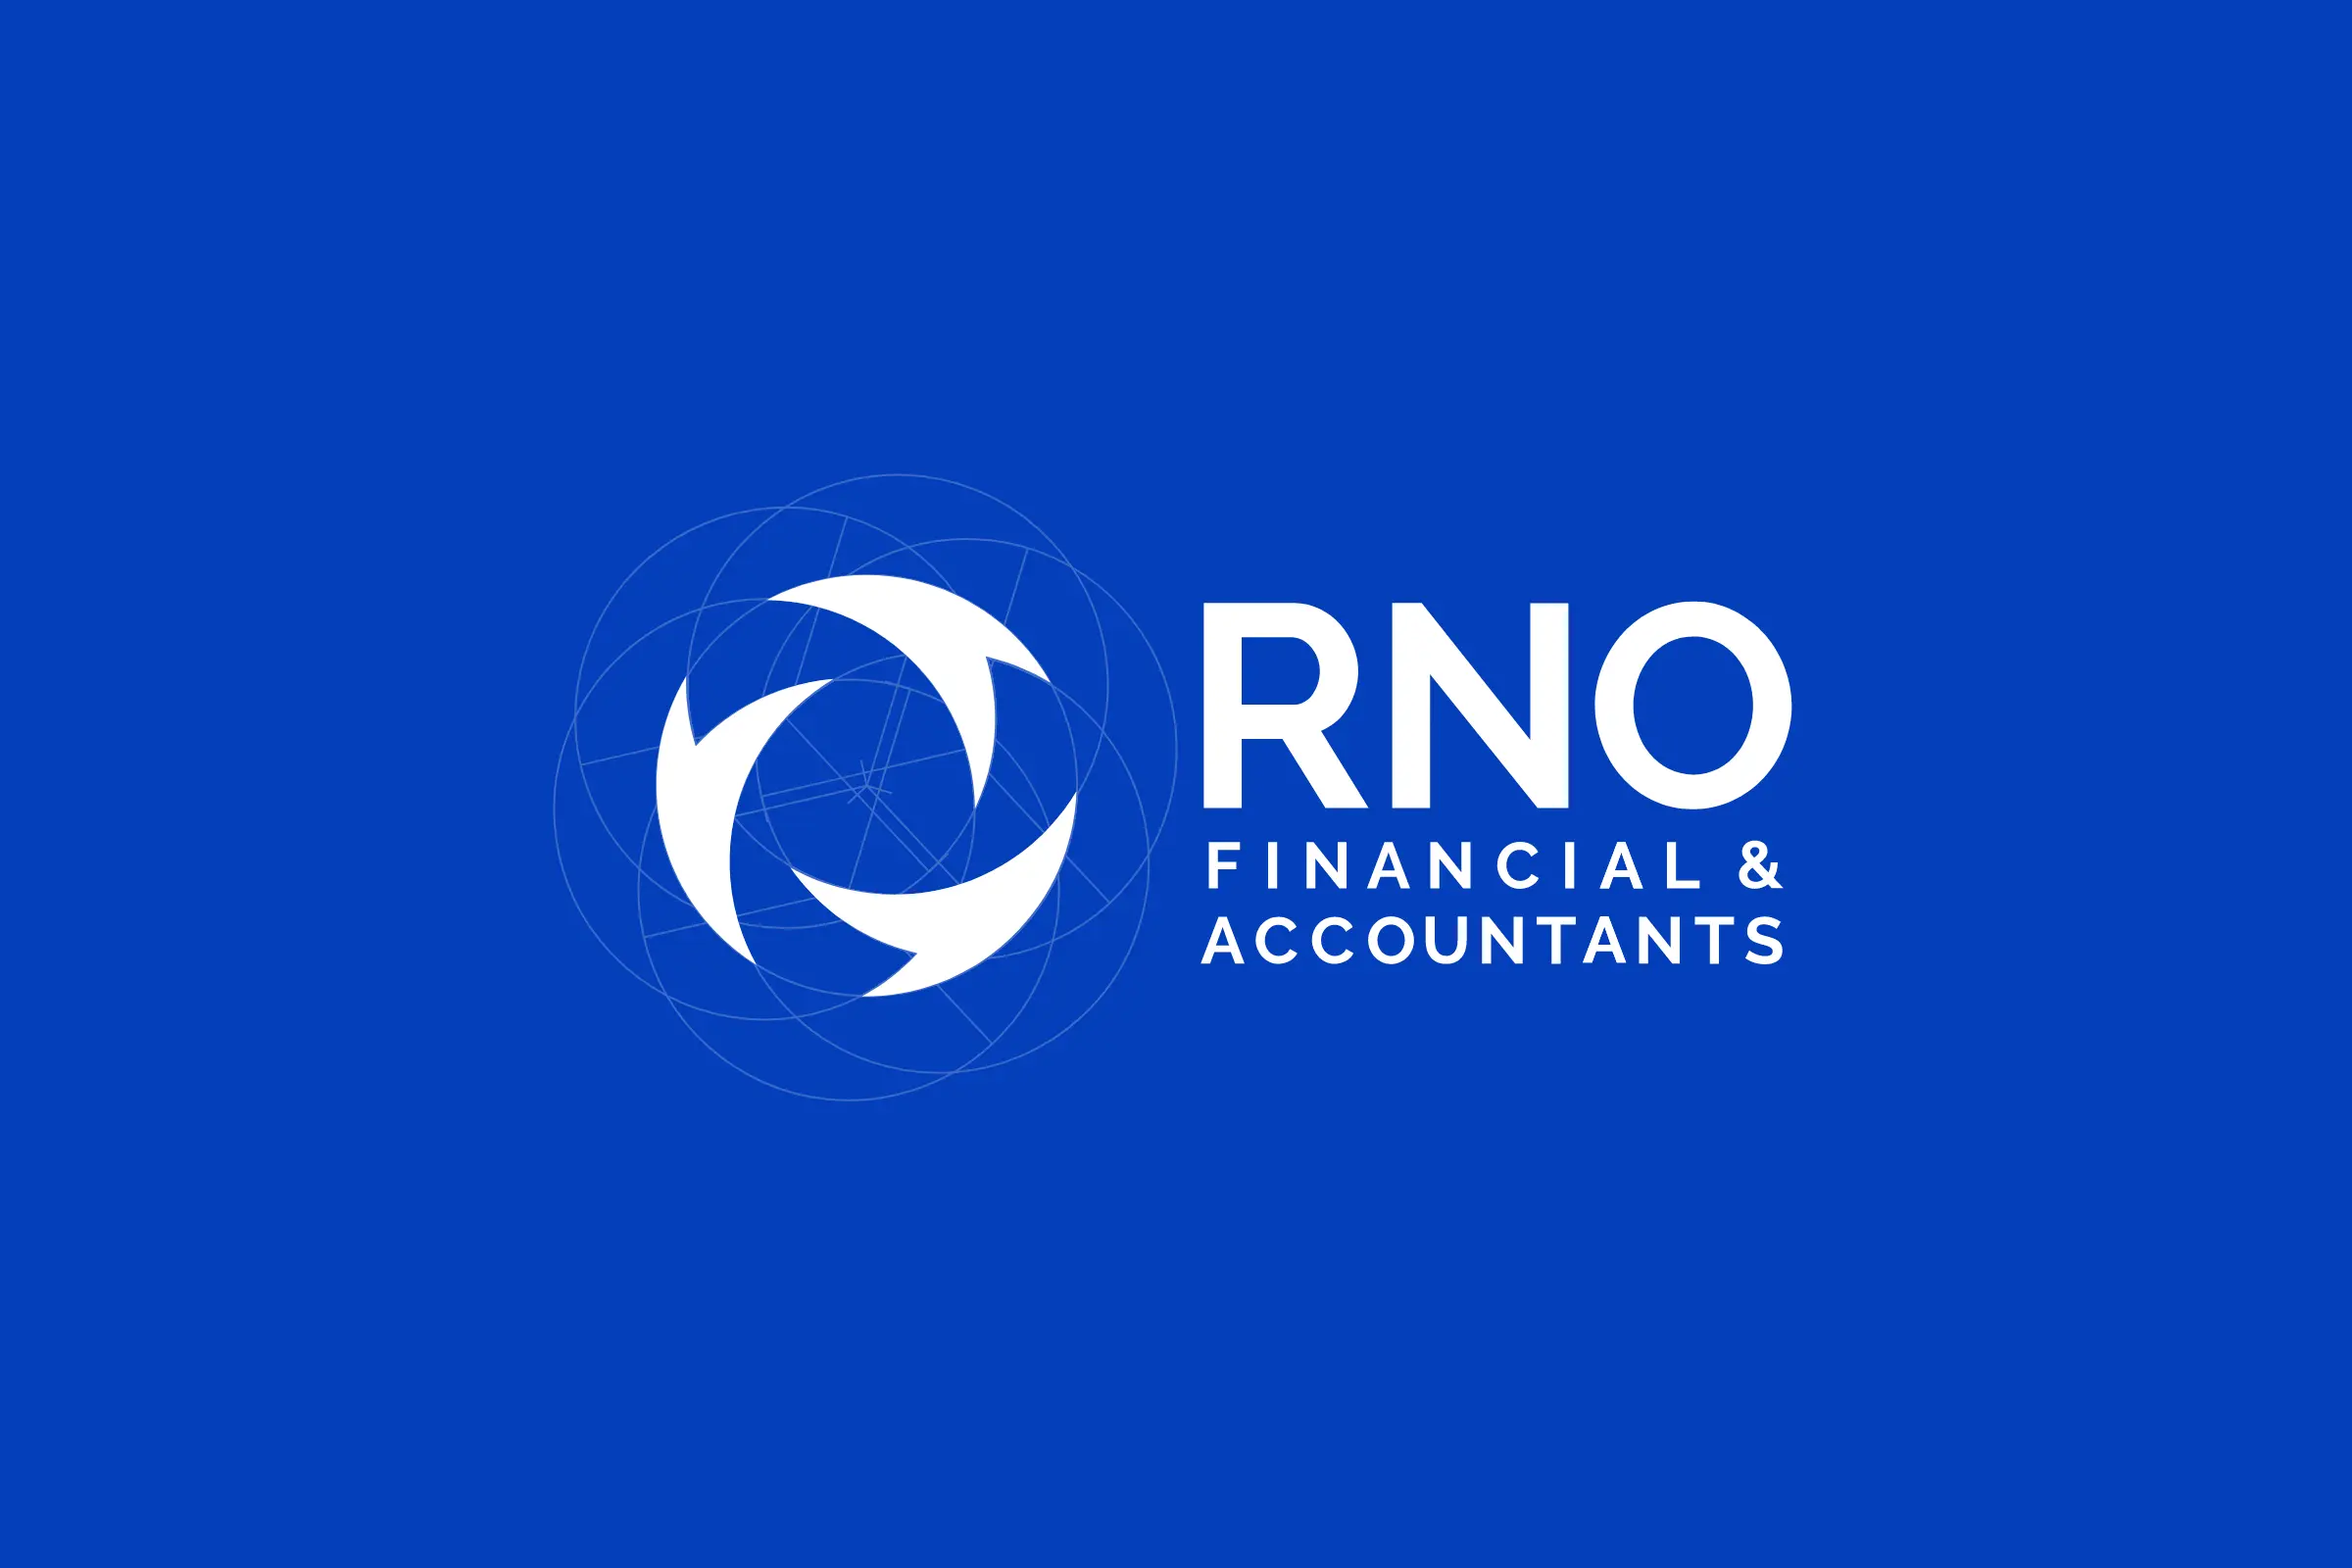 Rno financial logo reticula